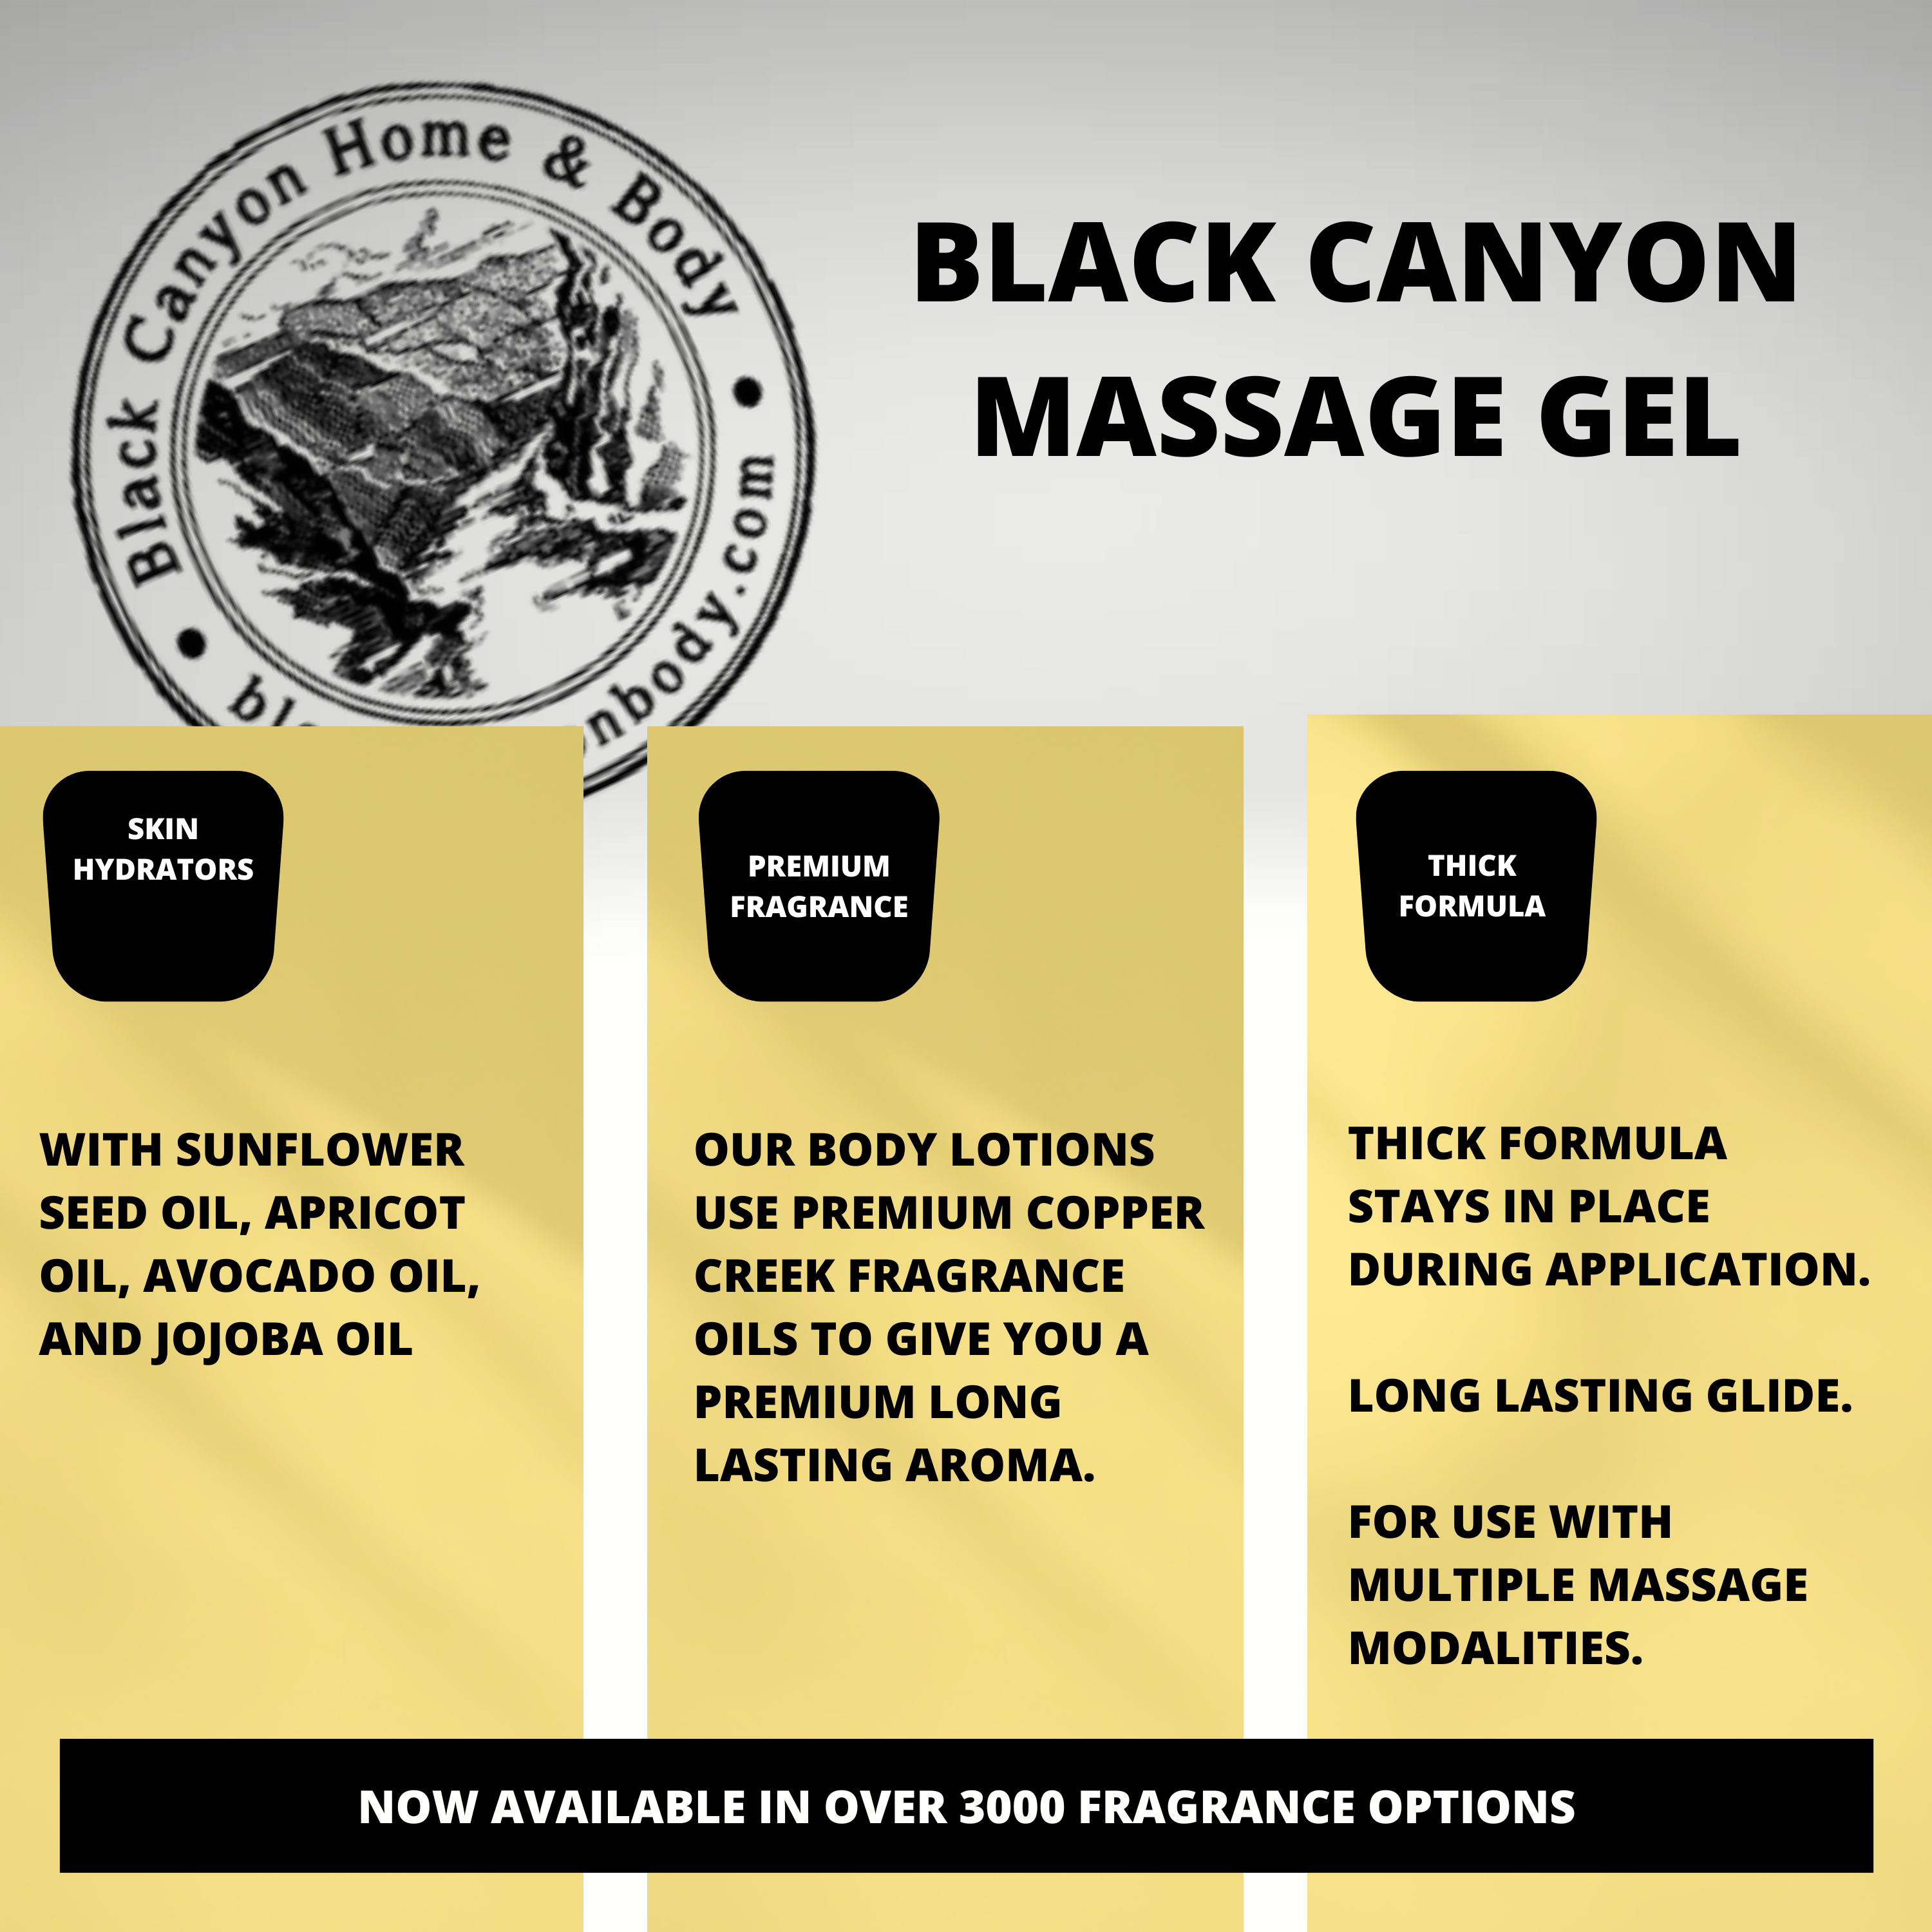 Black Canyon Orange Cinnamon Scented Massage Gel